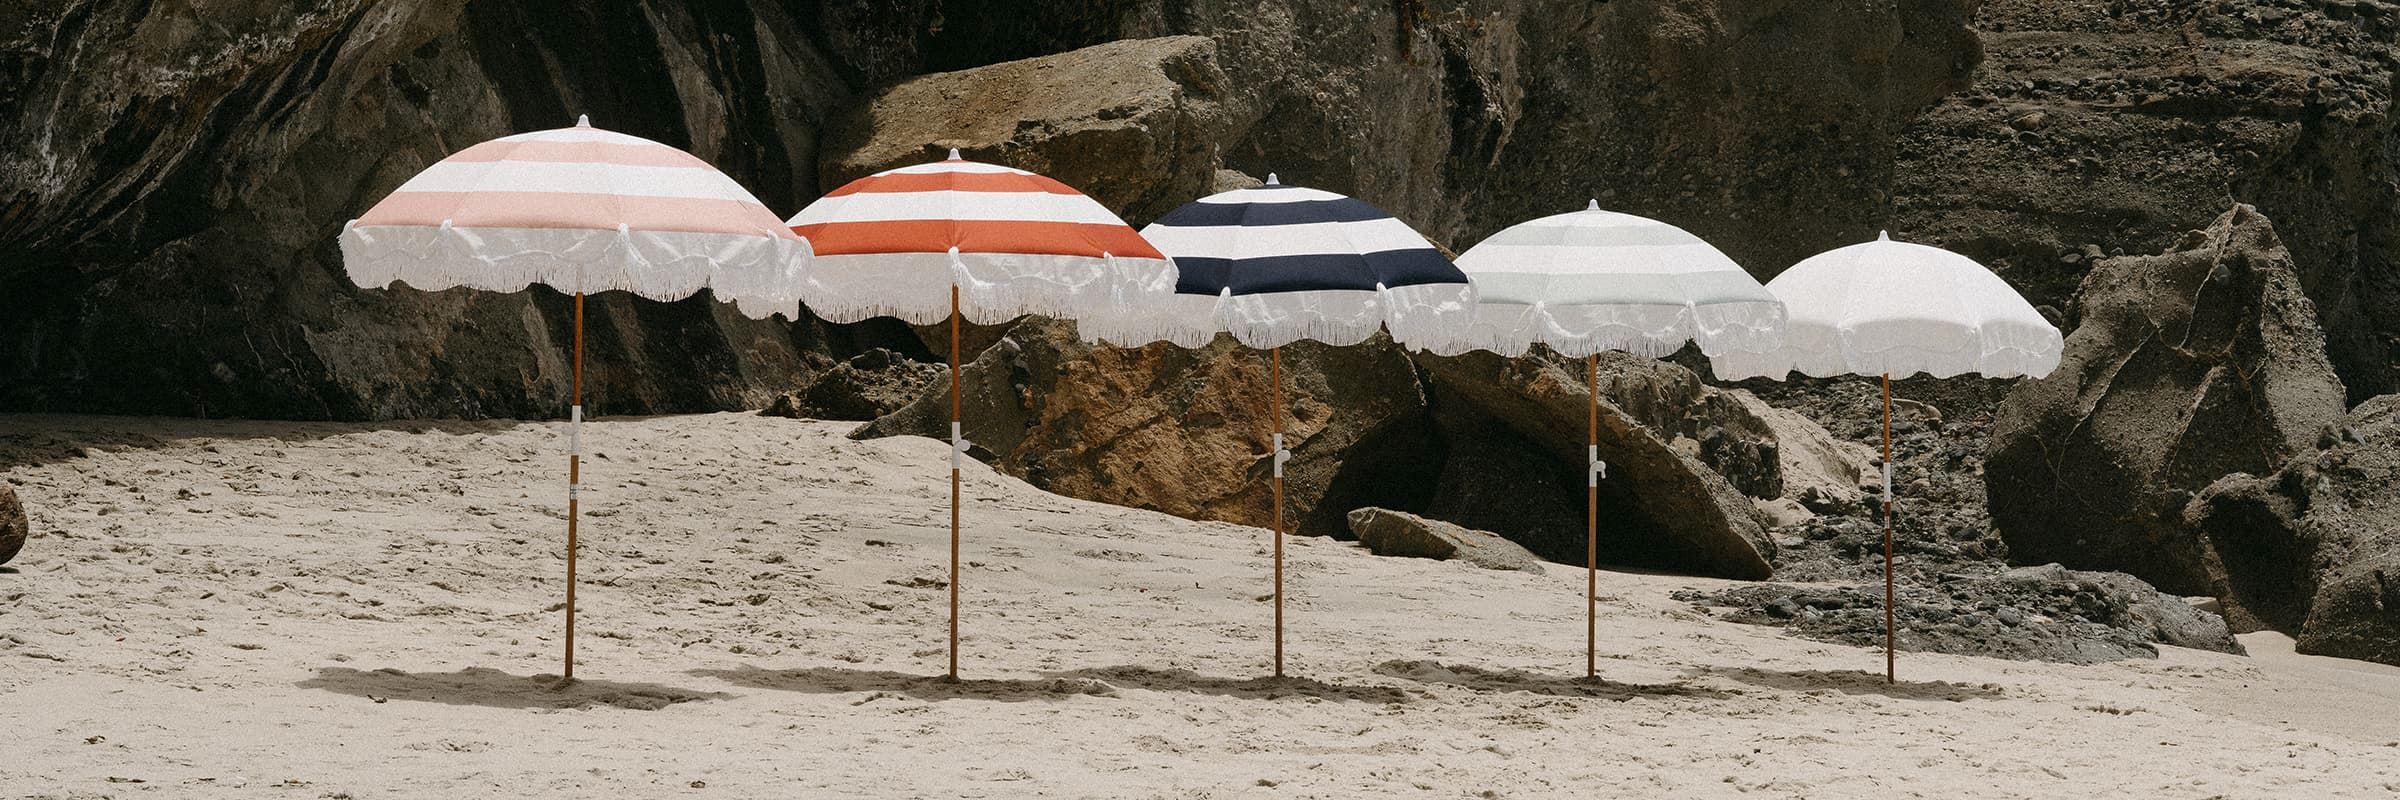 Holiday Beach Umbrellas